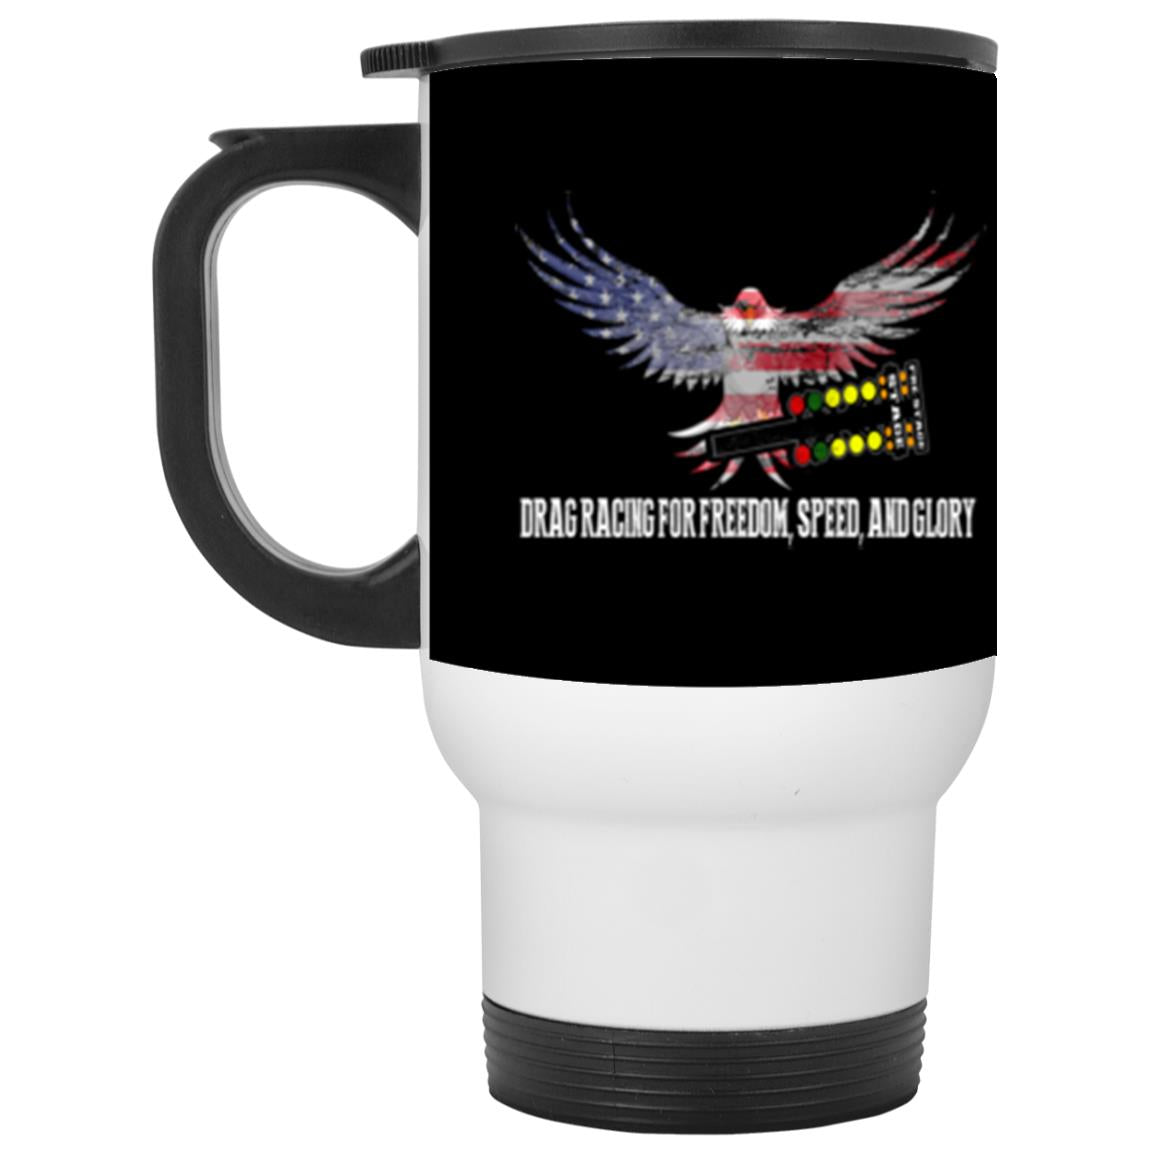 Drag Racing for Freedom, Speed, and Glory White Travel Mug